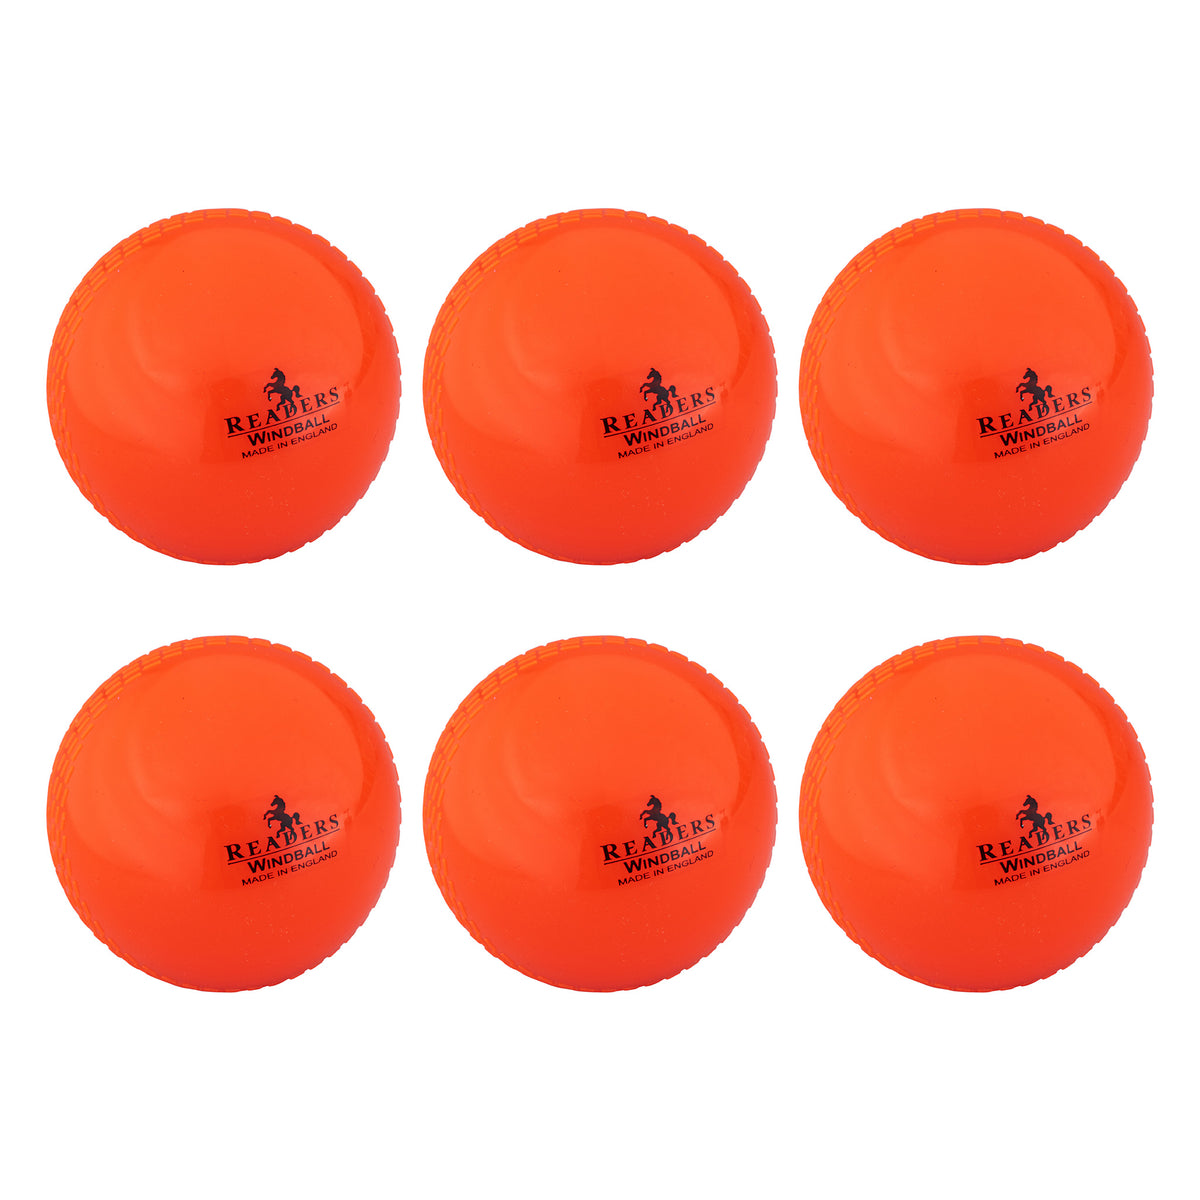 Readers Windball Senior Cricket Balls (Box of 6): Orange